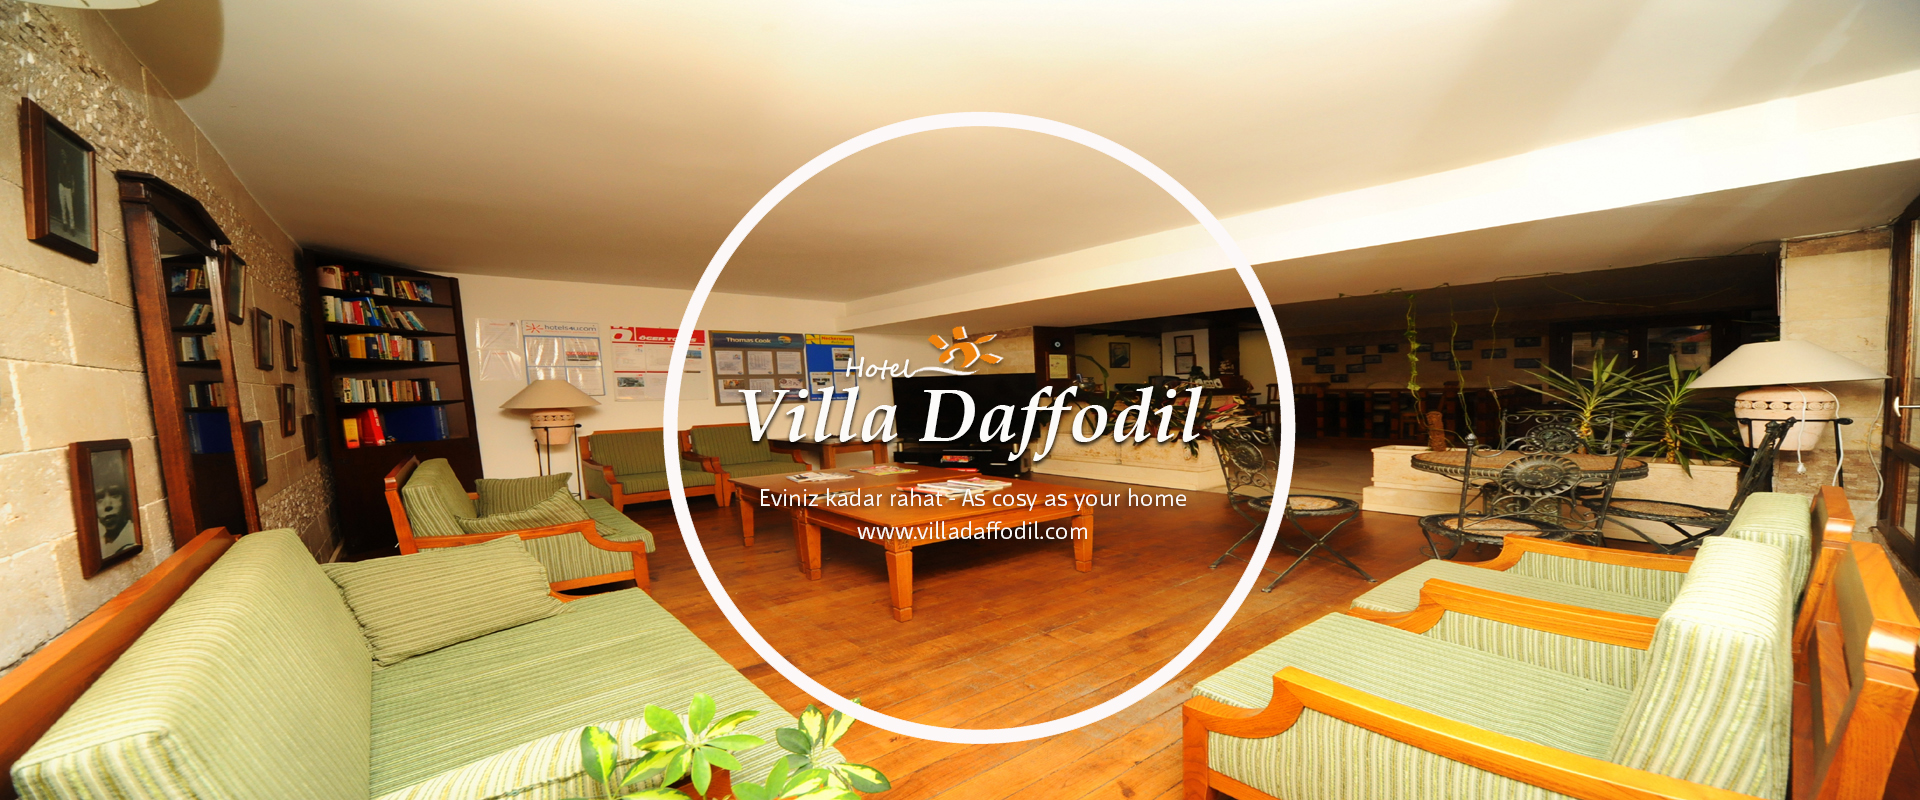 Hotel Villa Daffodil